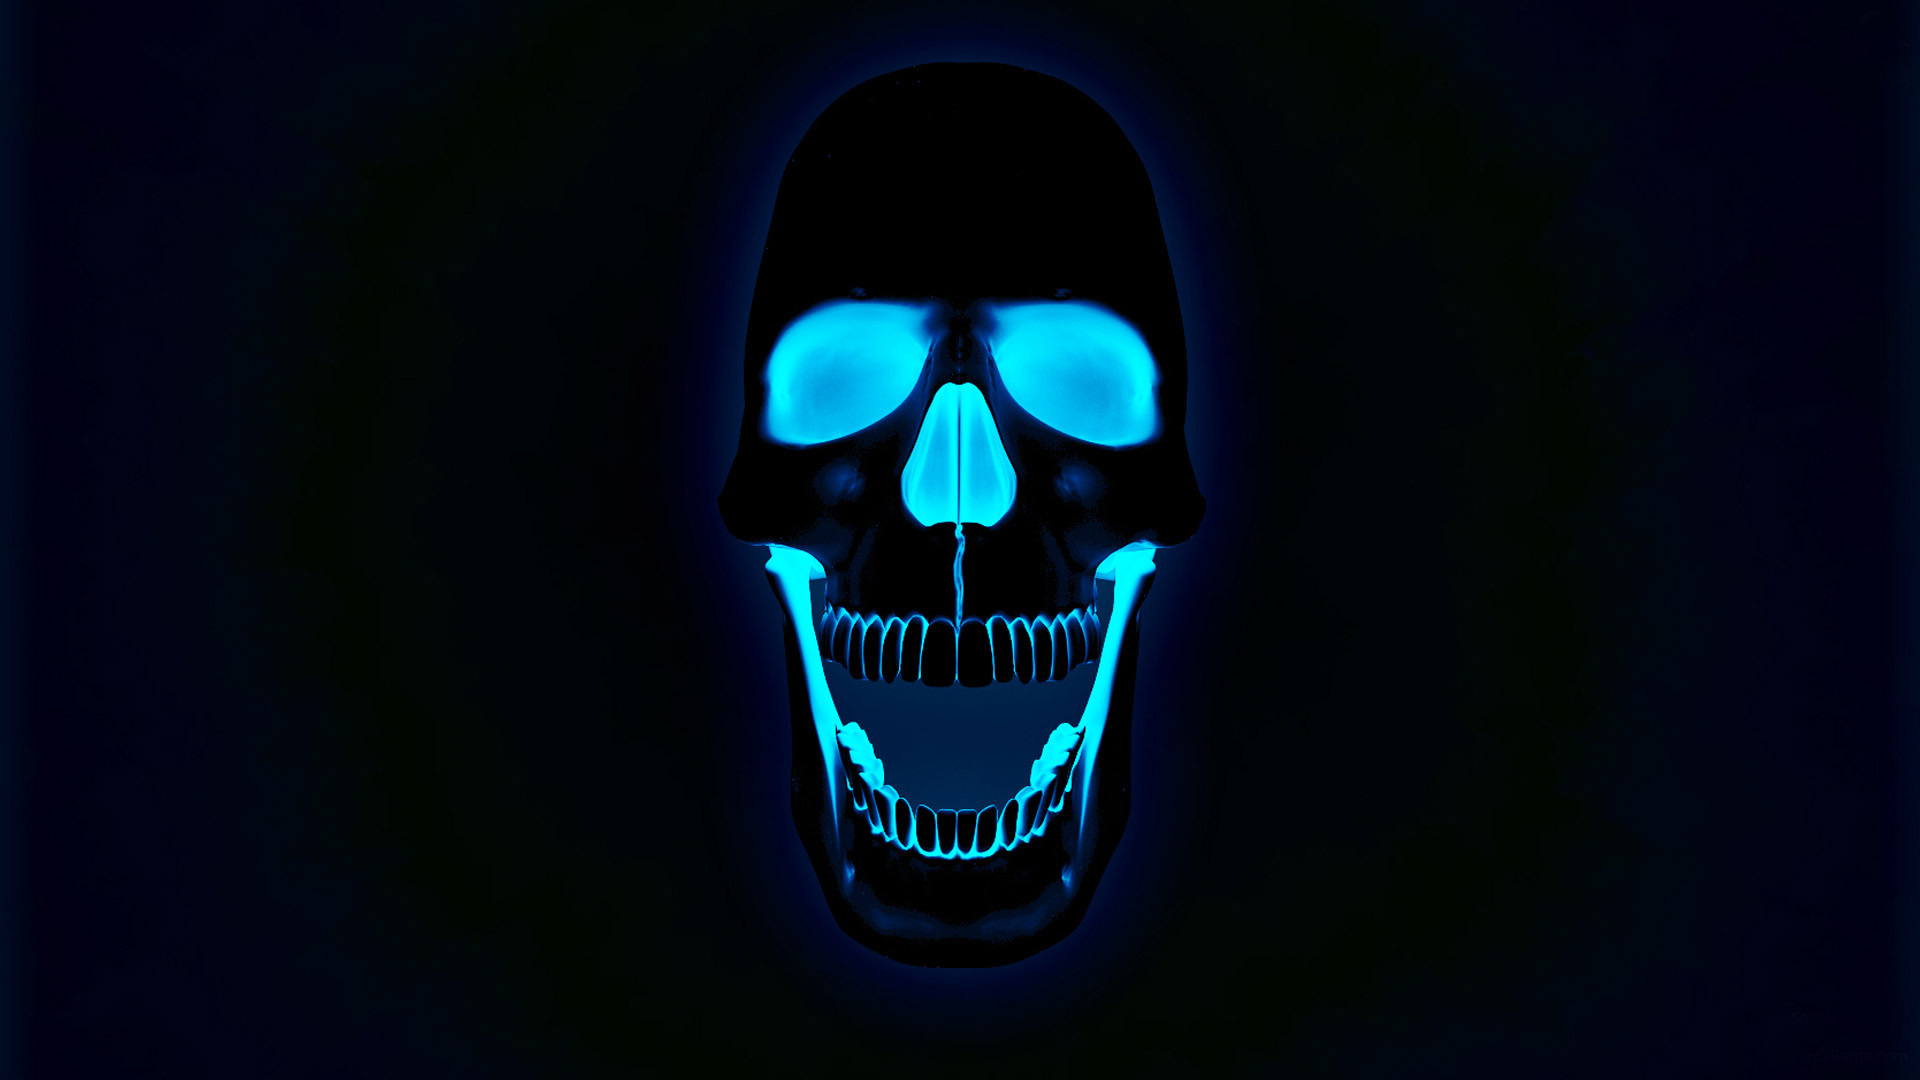 Glowing neon skull wallpaper